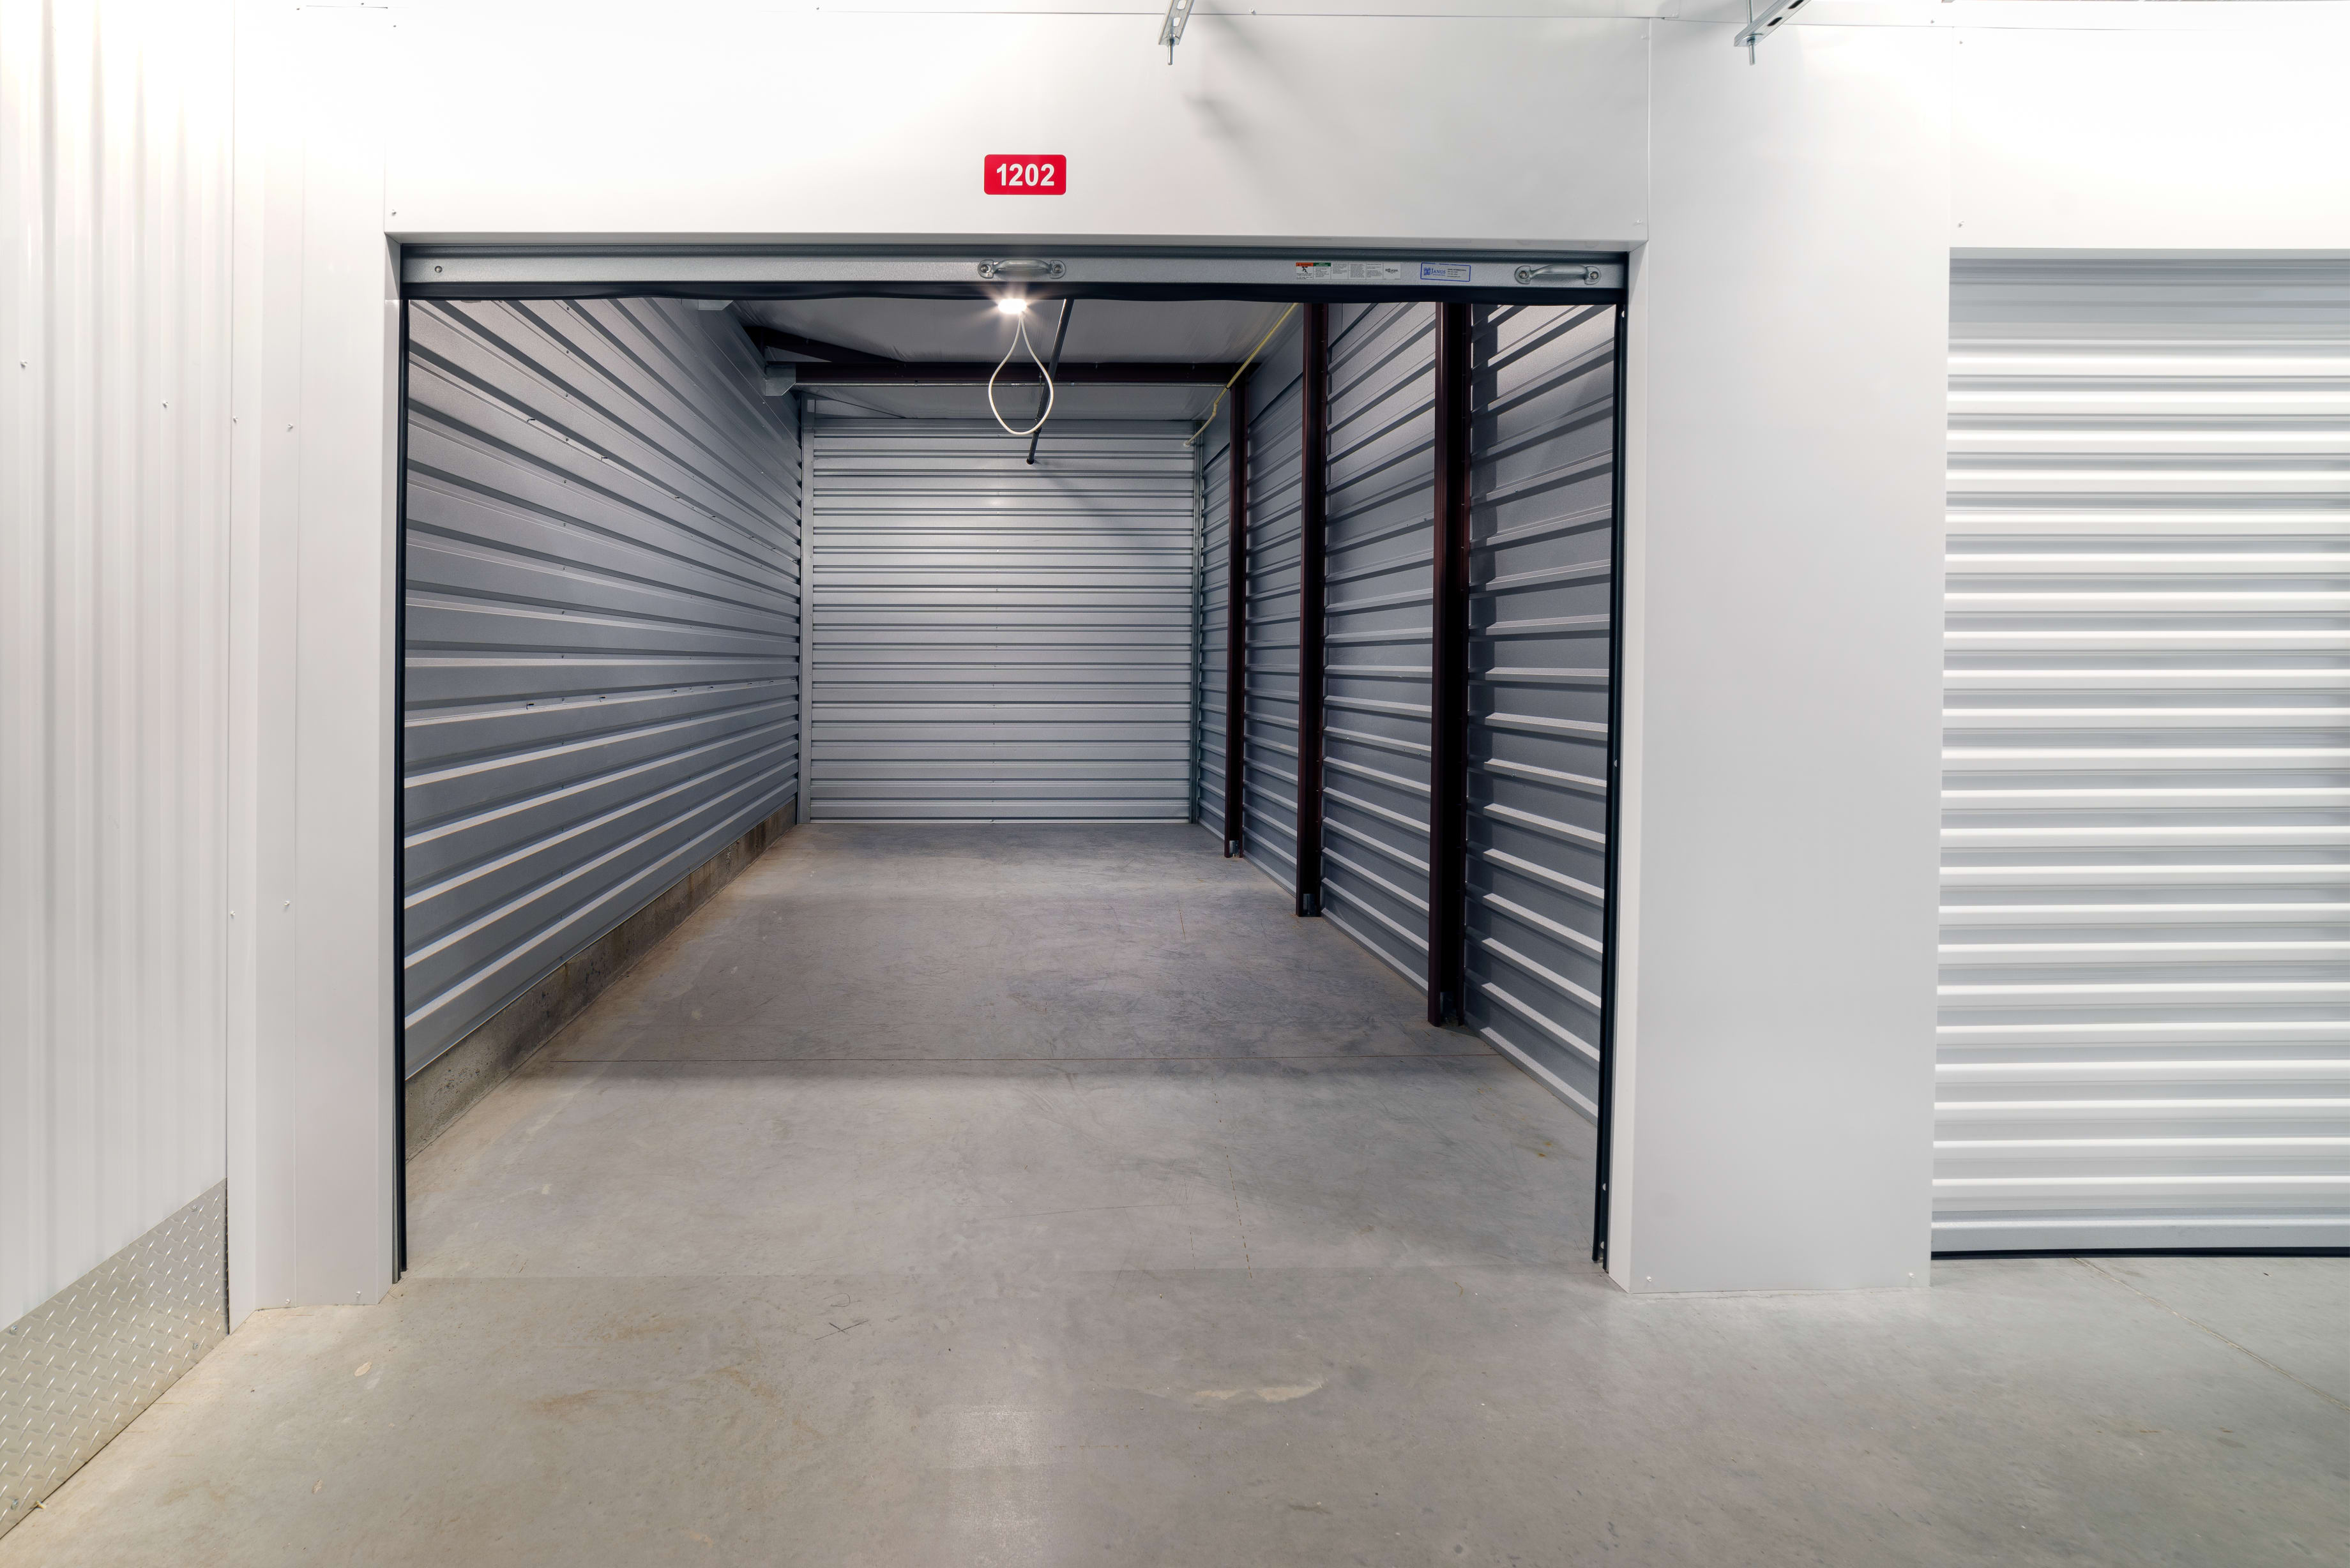 Indoor storage unit at Your Storage Units Apopka in Apopka, Florida